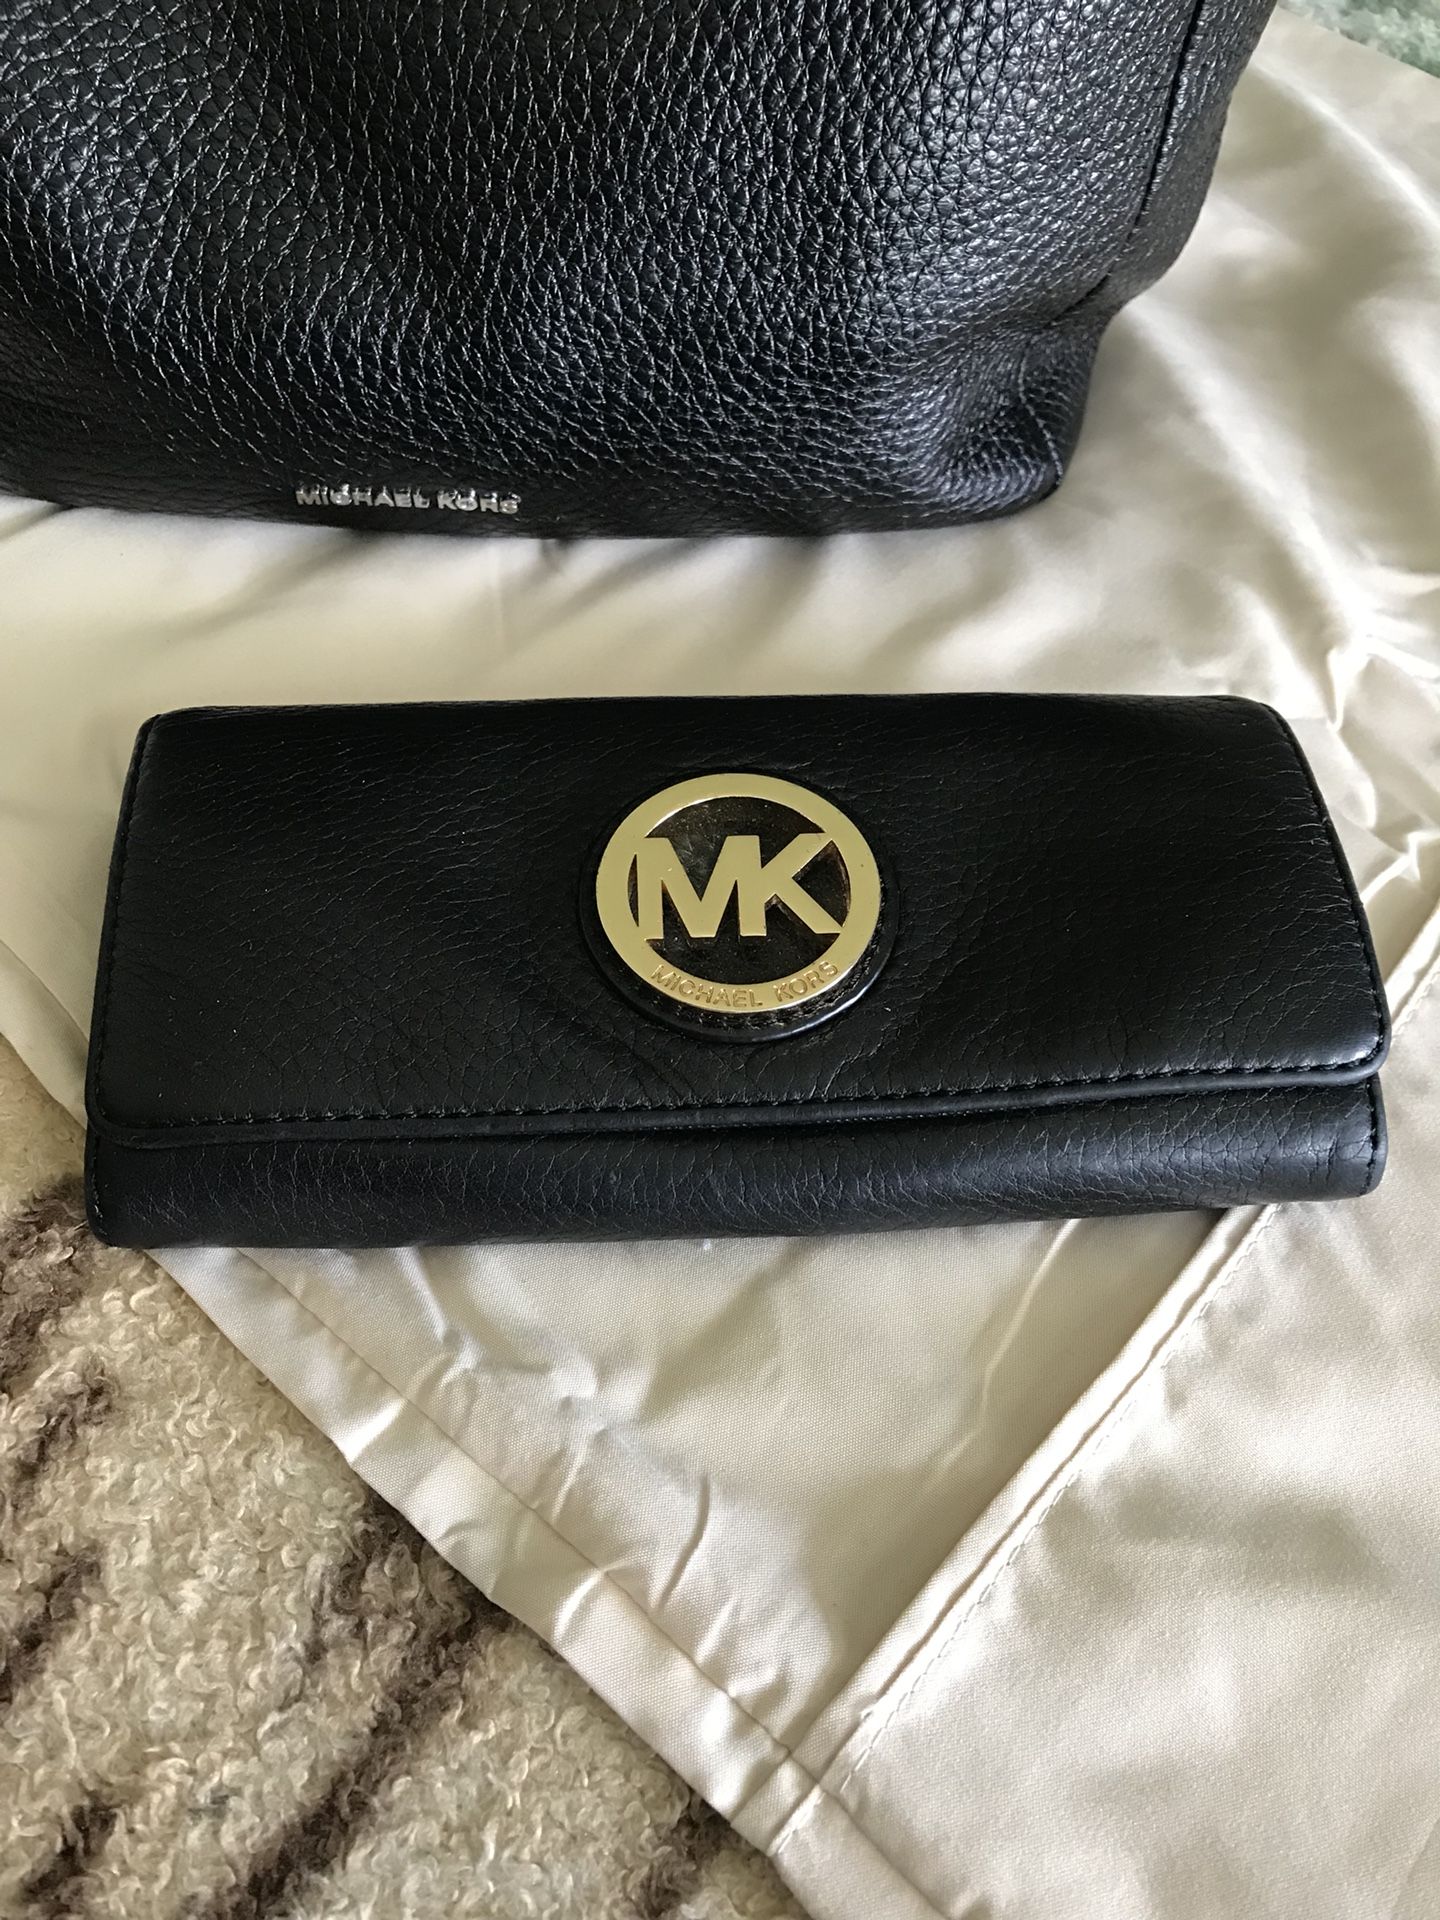 Original Michael Kors leather handbag and wallet